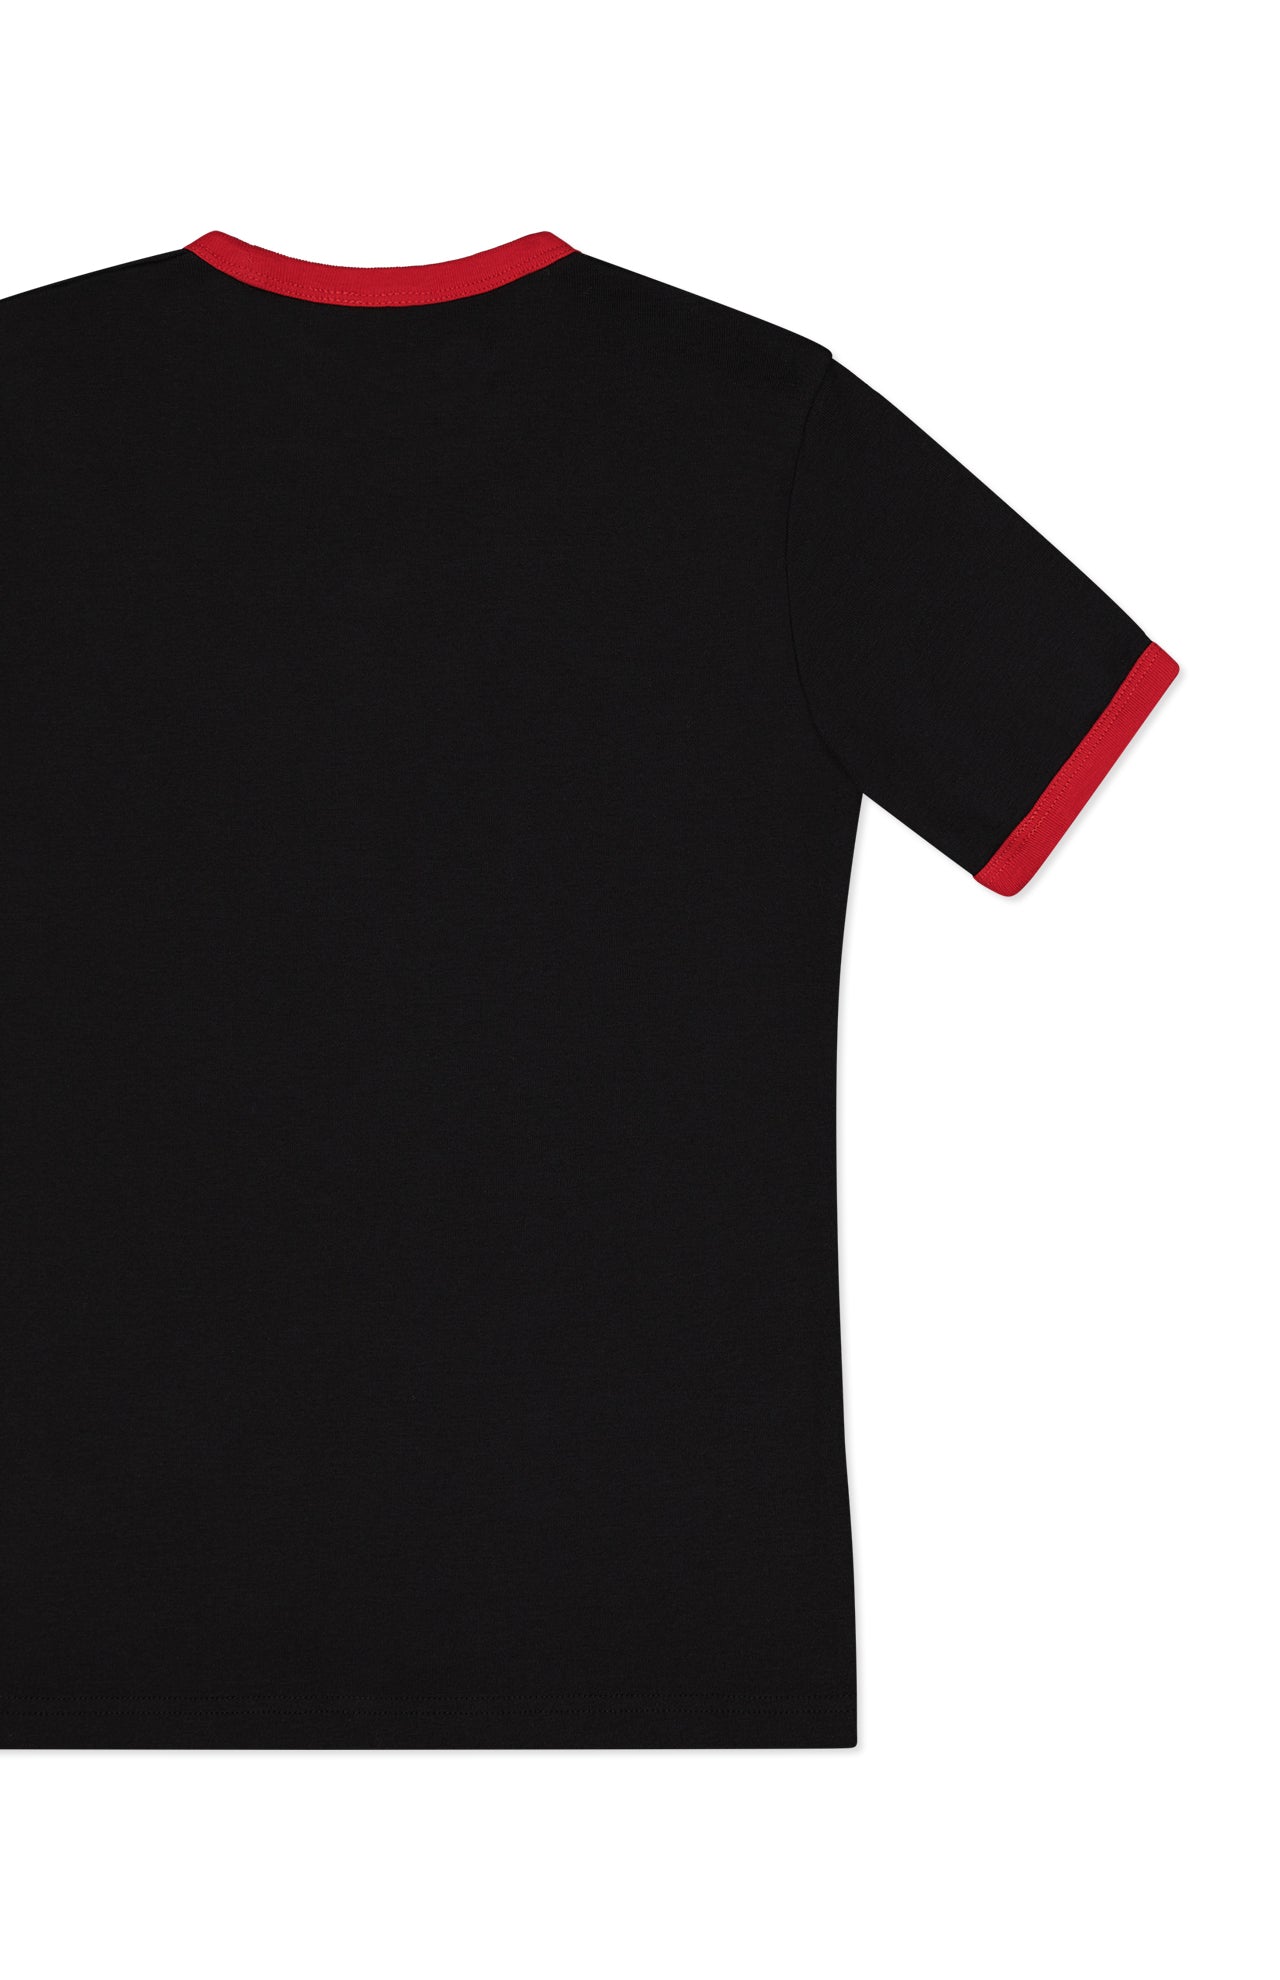 Contrast T-Shirt (7162953072755)